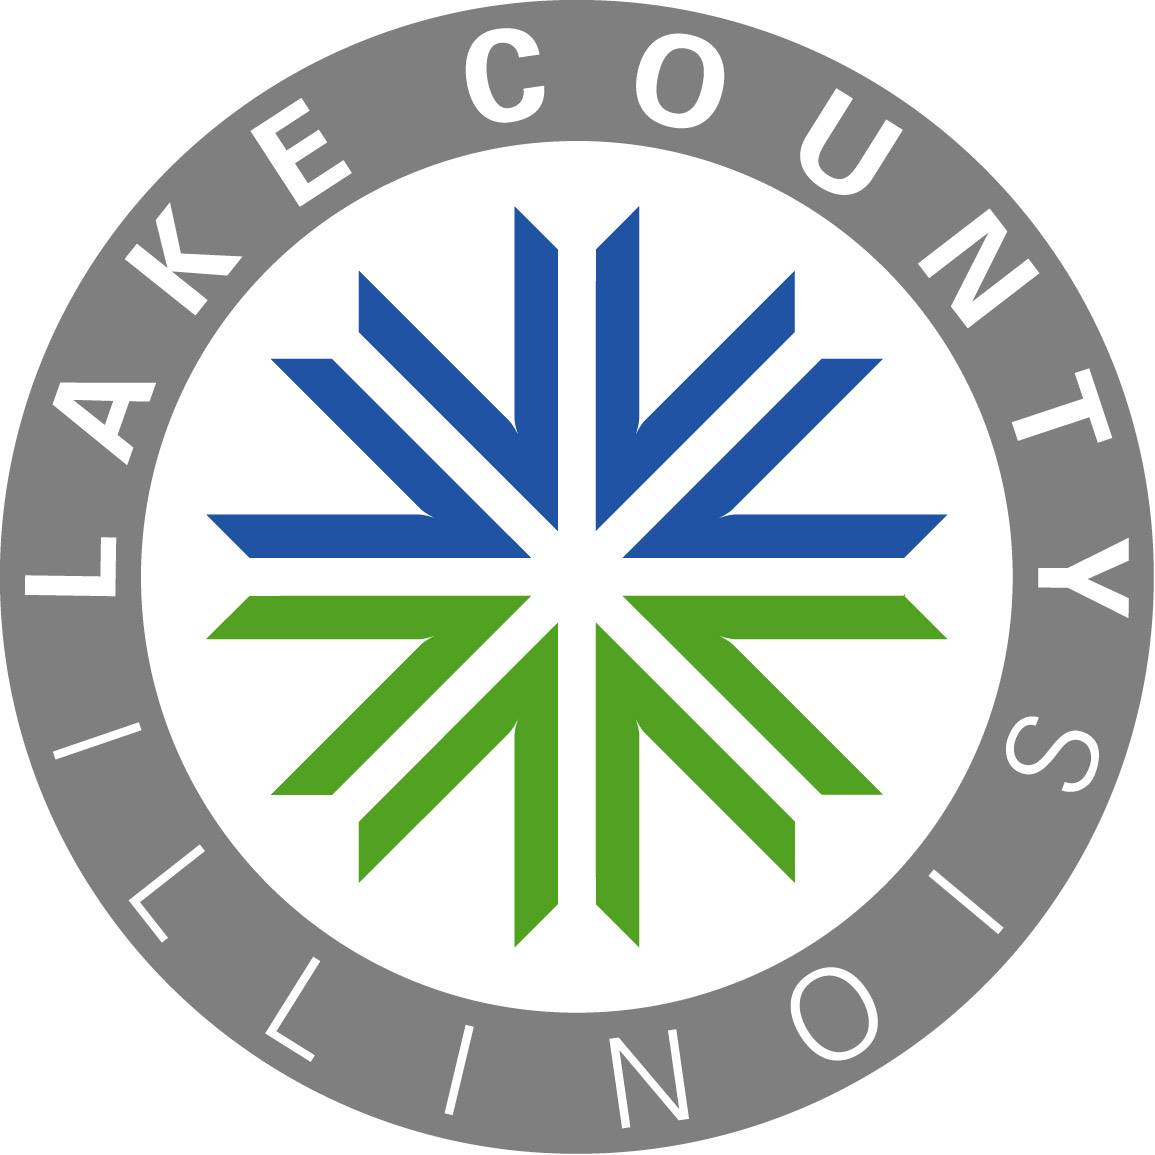 Planning, Building & Development Department Community Development Division - LAKE COUNTY